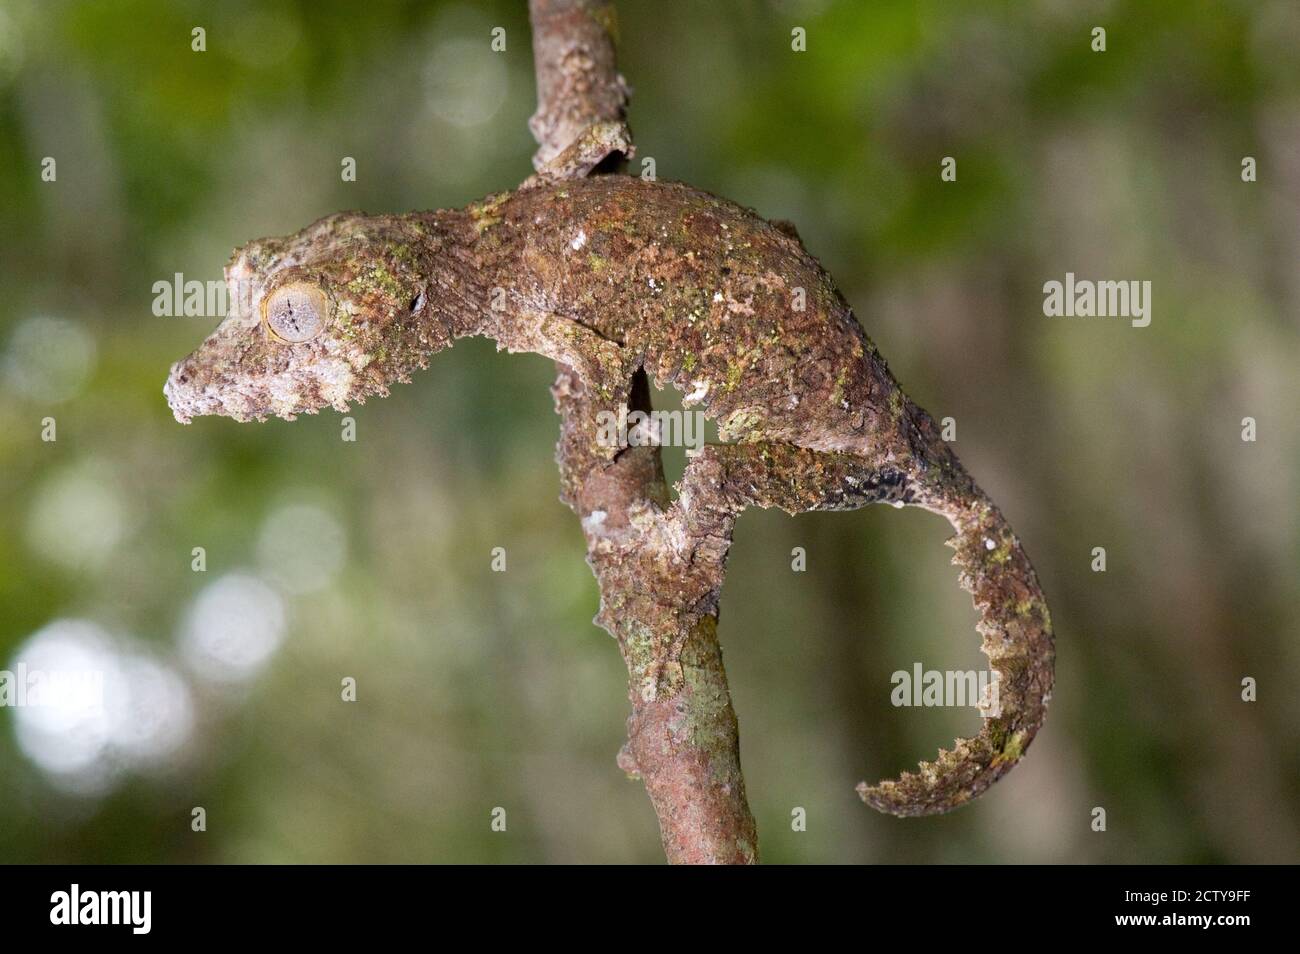 Close-up of a Leaf-Tailed gecko (Uroplatus fimbriatus), Andasibe-Mantadia National Park, Madagascar Stock Photo